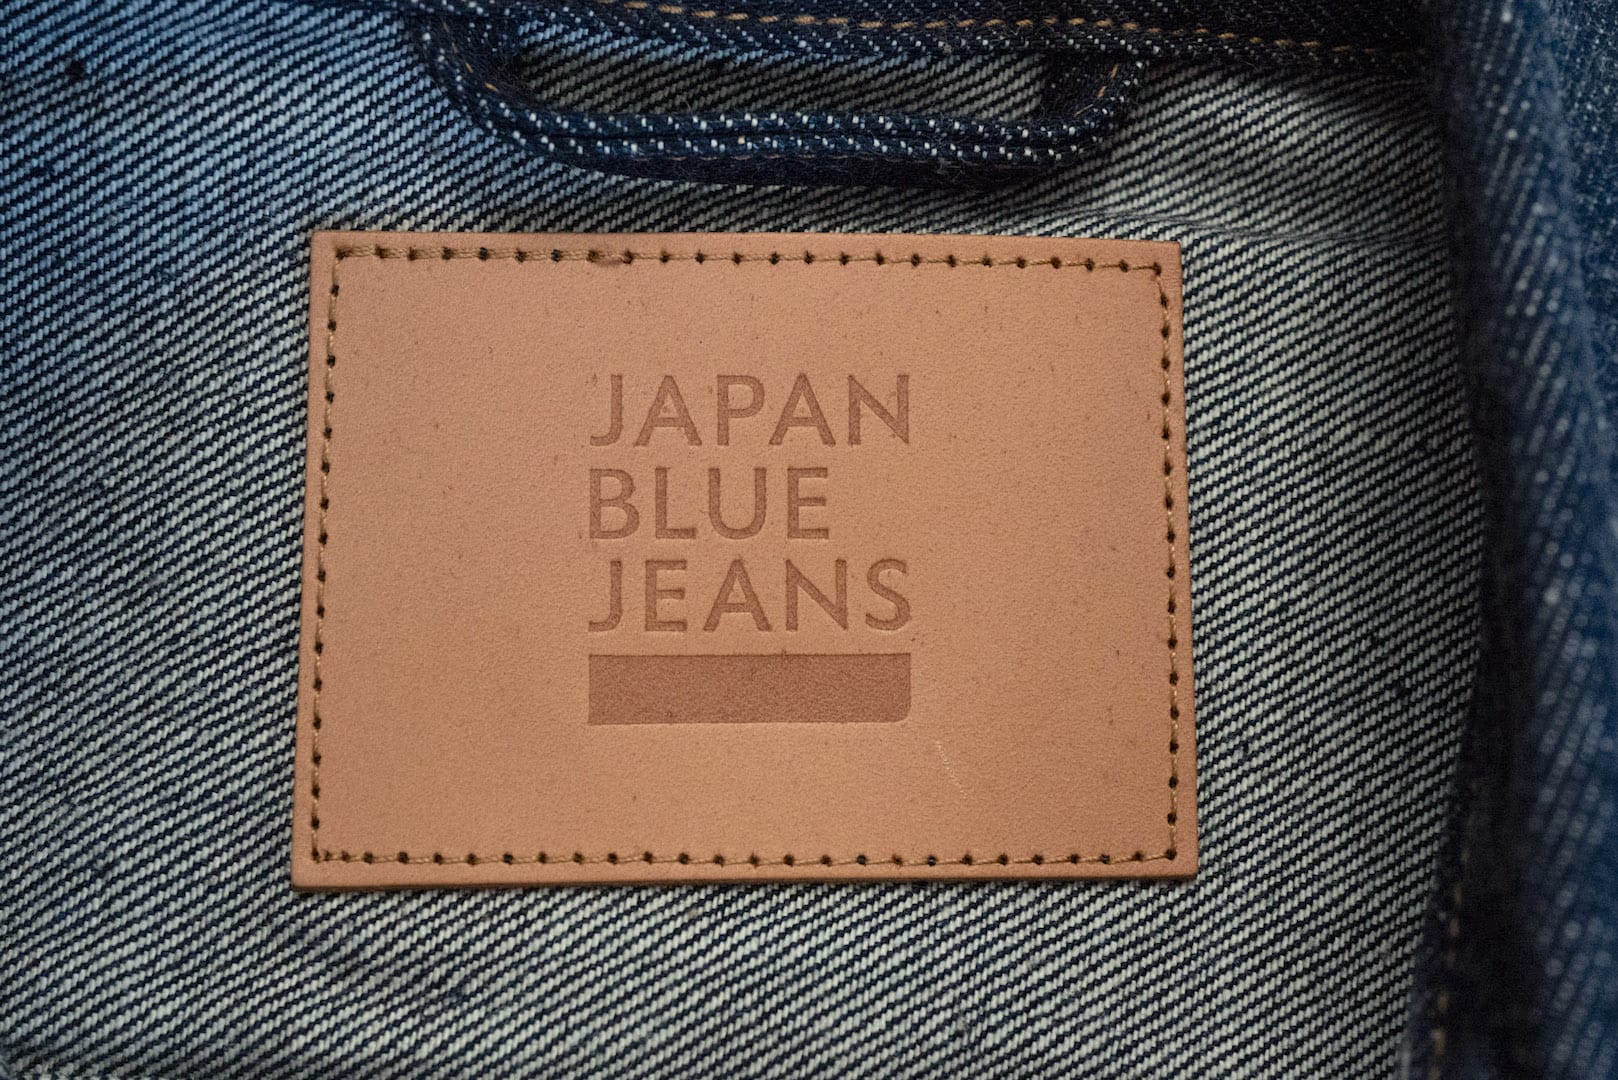 Japan Blue 13.5oz 4th Type Denim Jacket